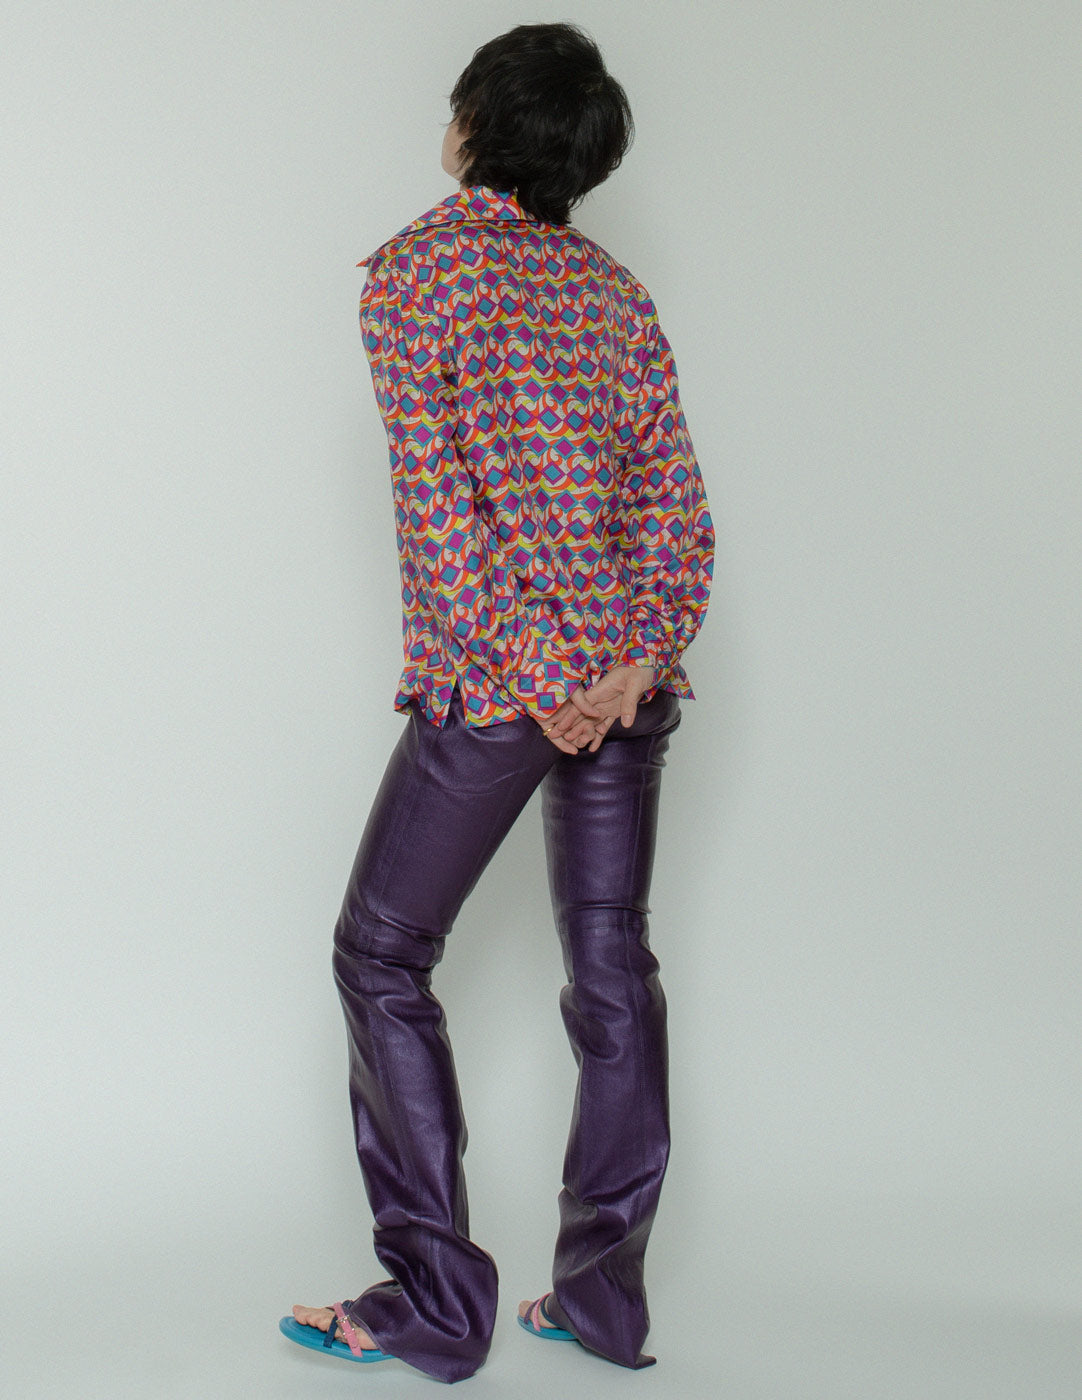 Emilio Pucci silk jersey - 'Geometric Retro Print' - Sew Tessuti Blog